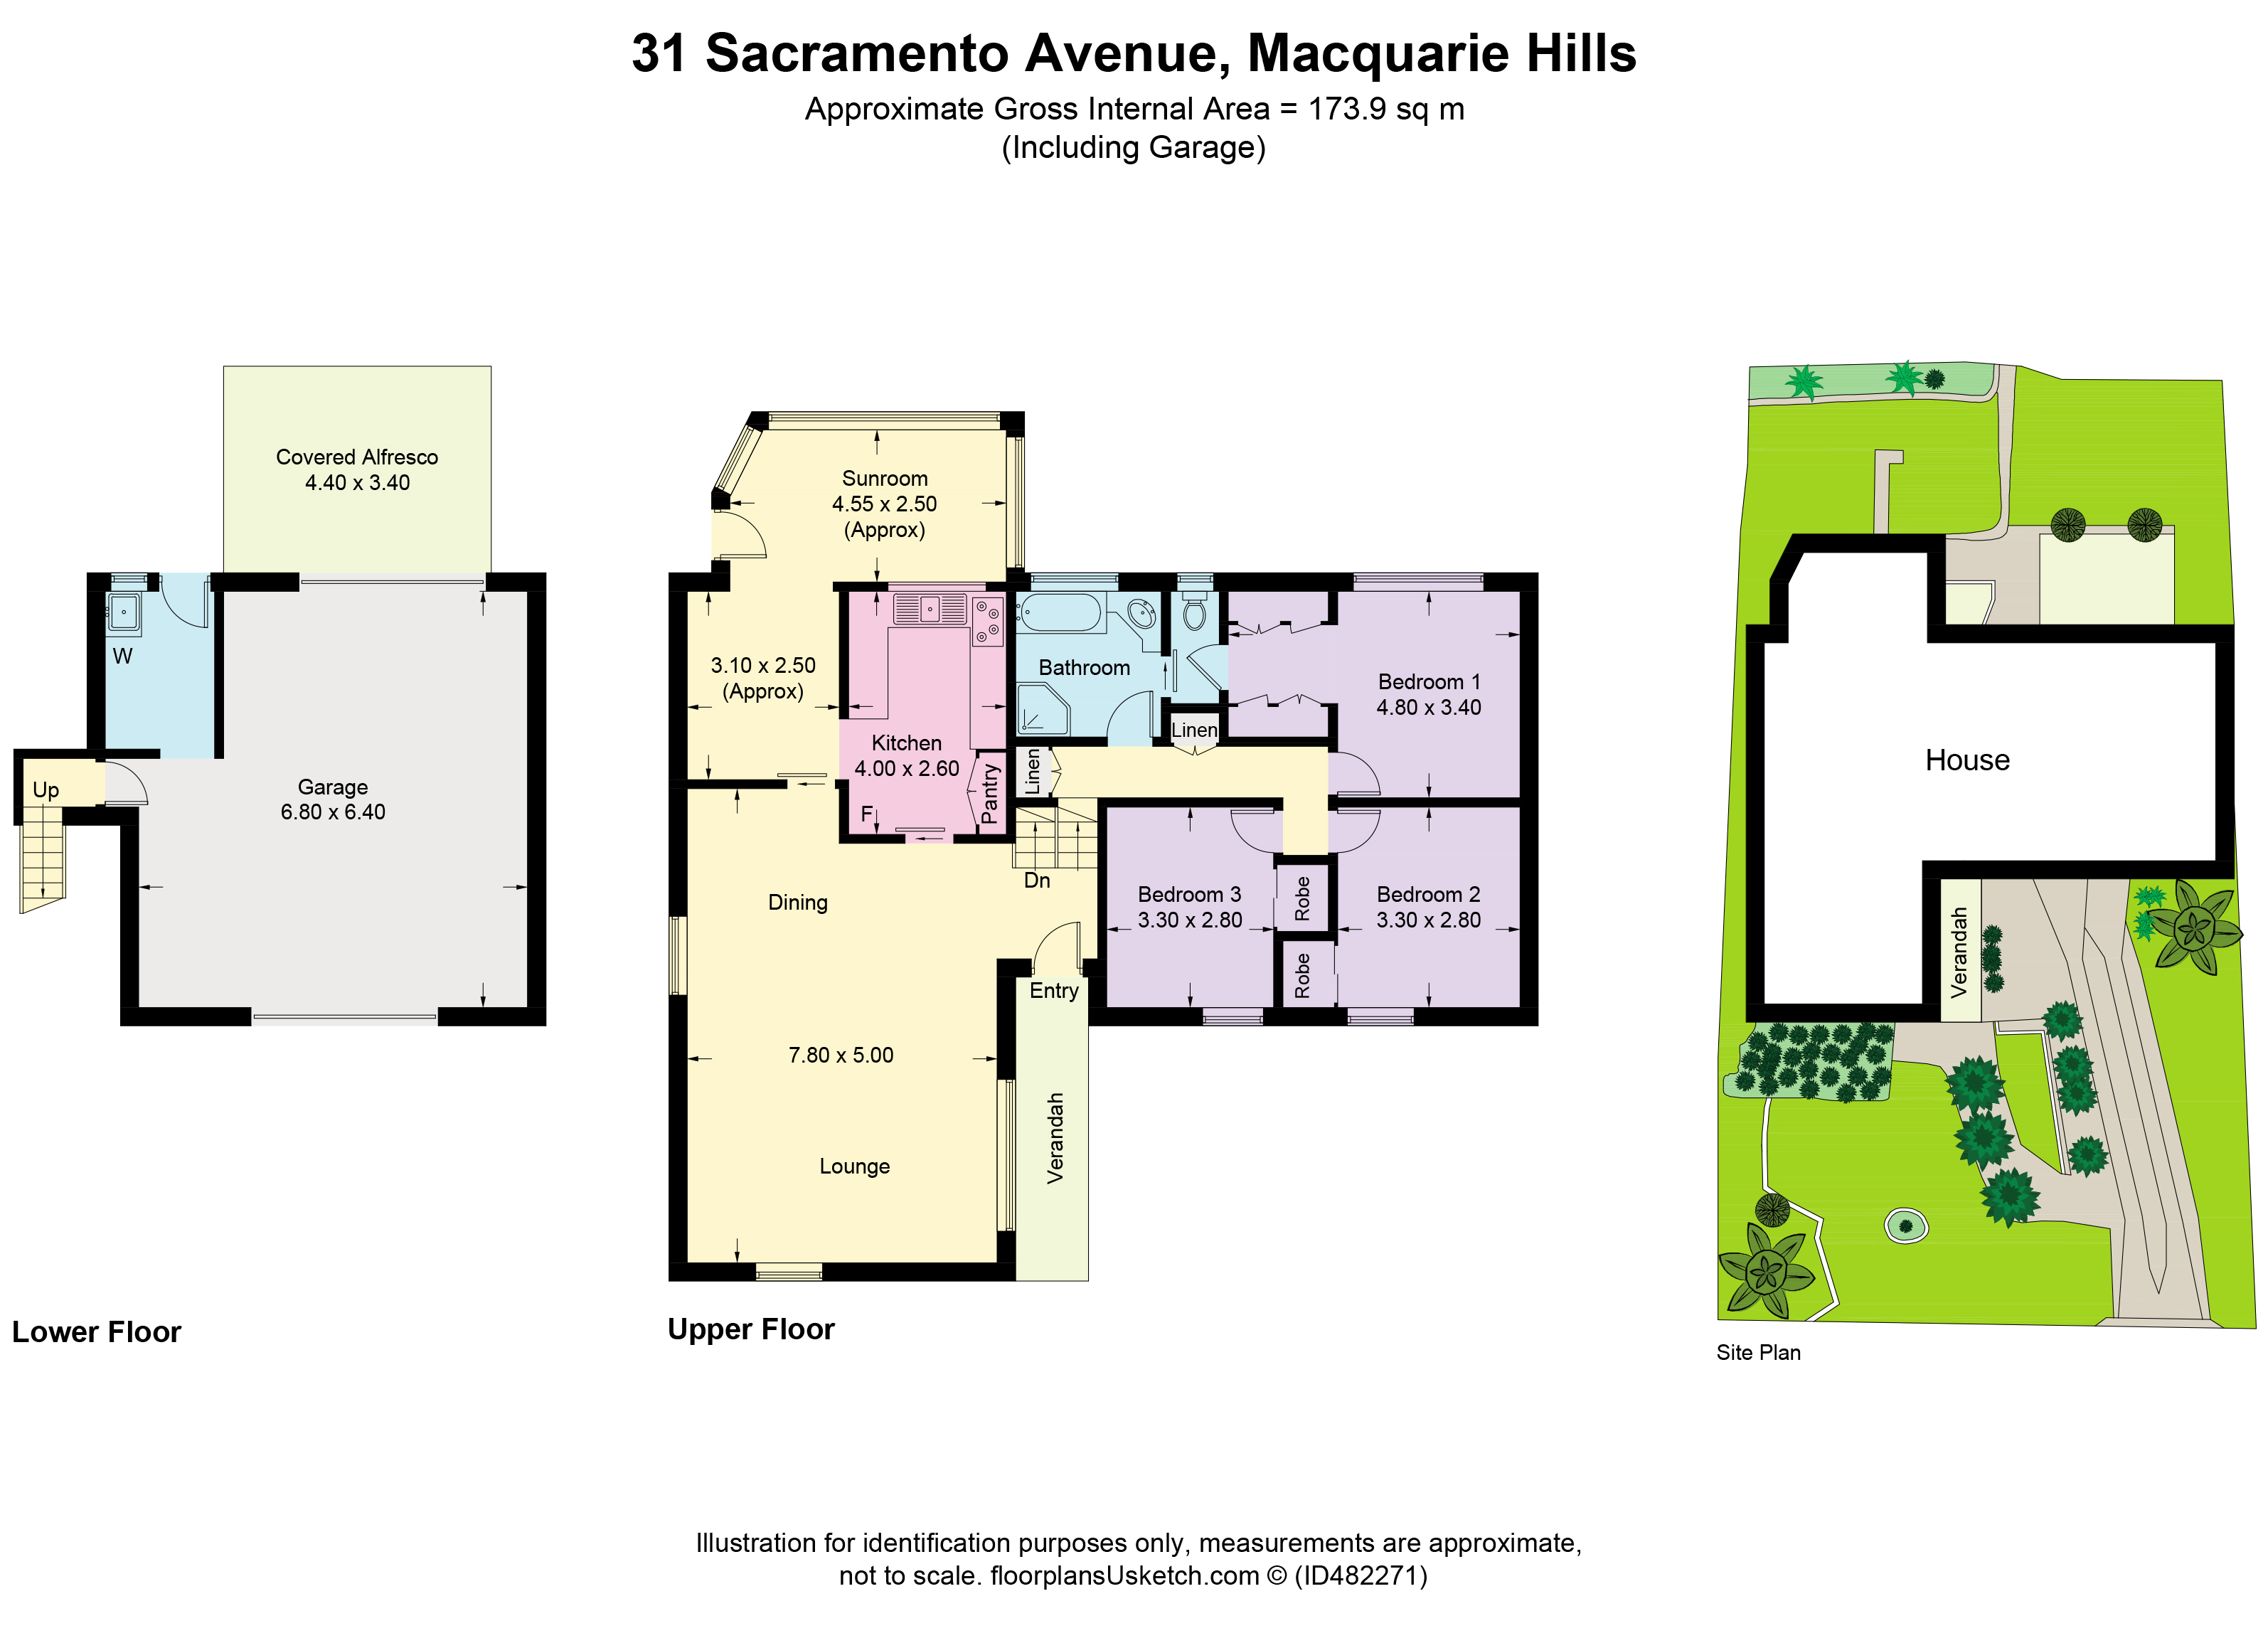 31 Sacramento Avenue, Macquarie Hills, NSW 2285